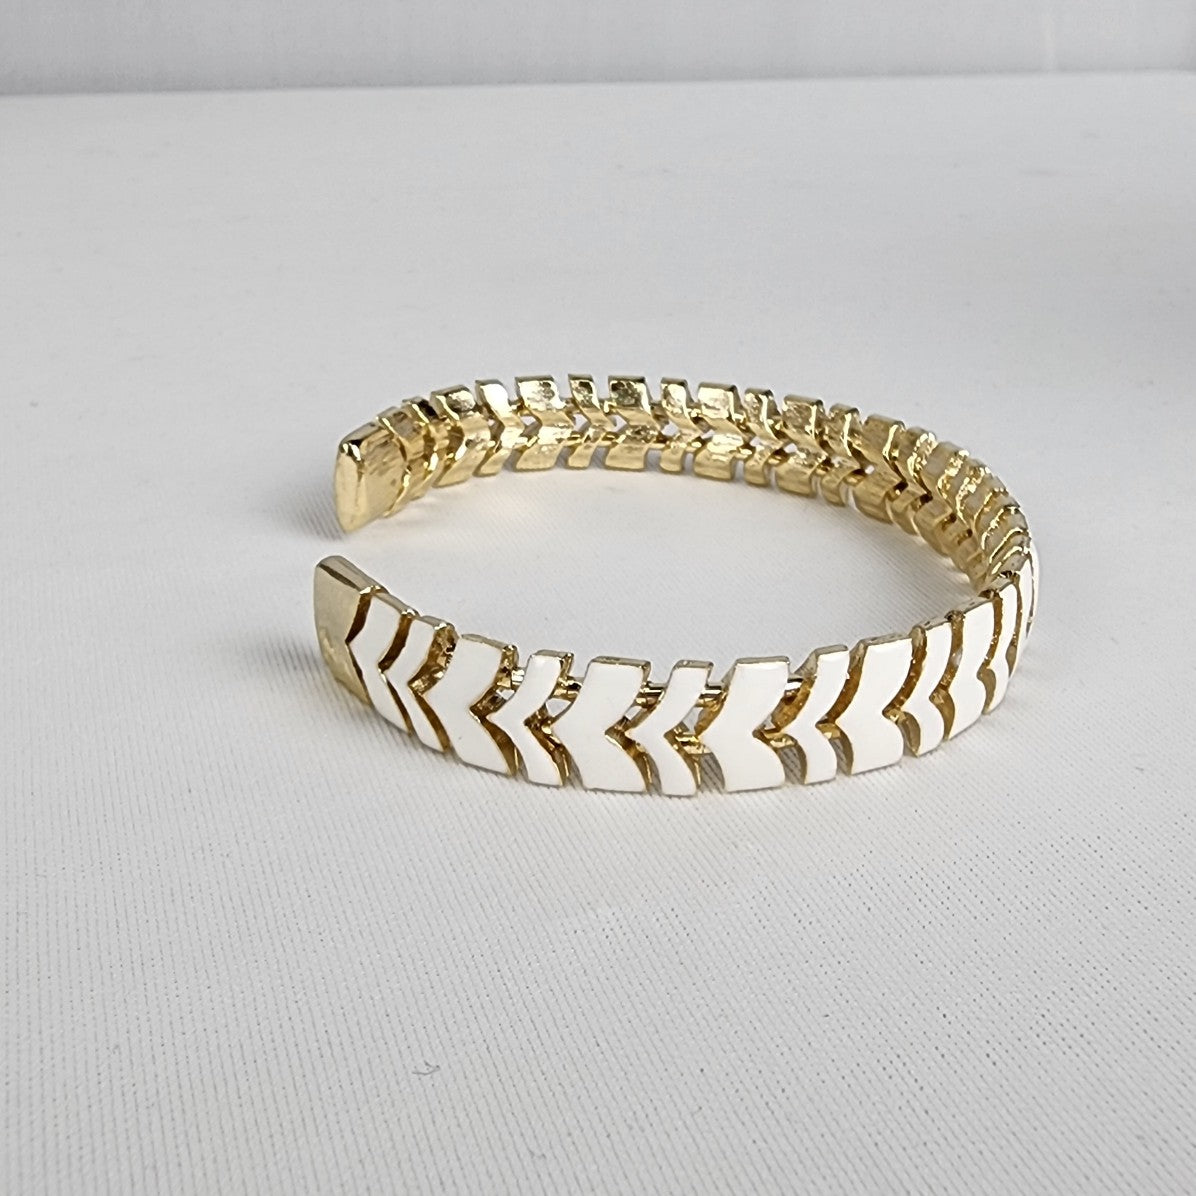 Vintage White & Gold Enamel Metal Cuff Bracelet